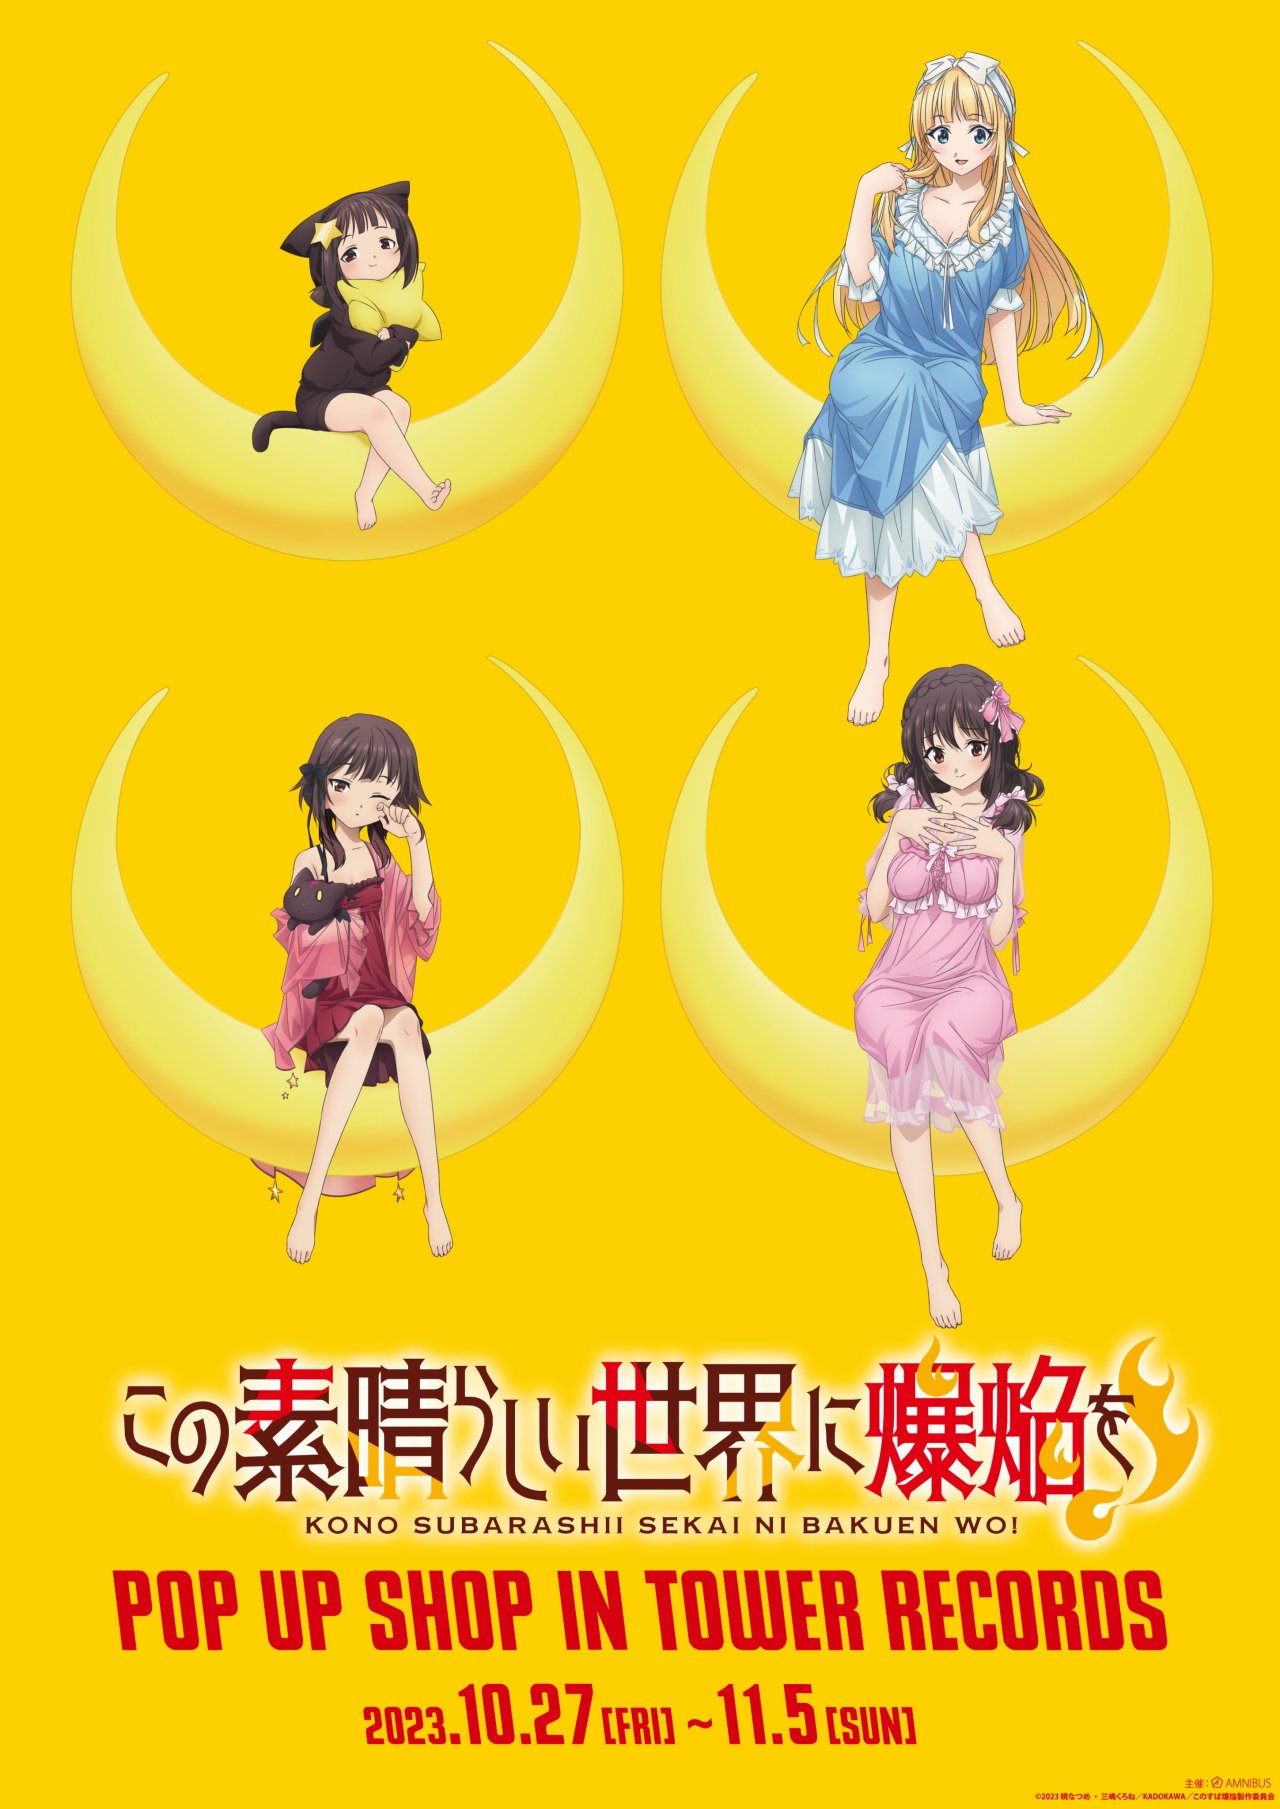 The 'Kono Subarashii Sekai ni Bakuen wo!' POP UP SHOP in TOWER RECORDS  event has been announced! - Japan Culture Guide